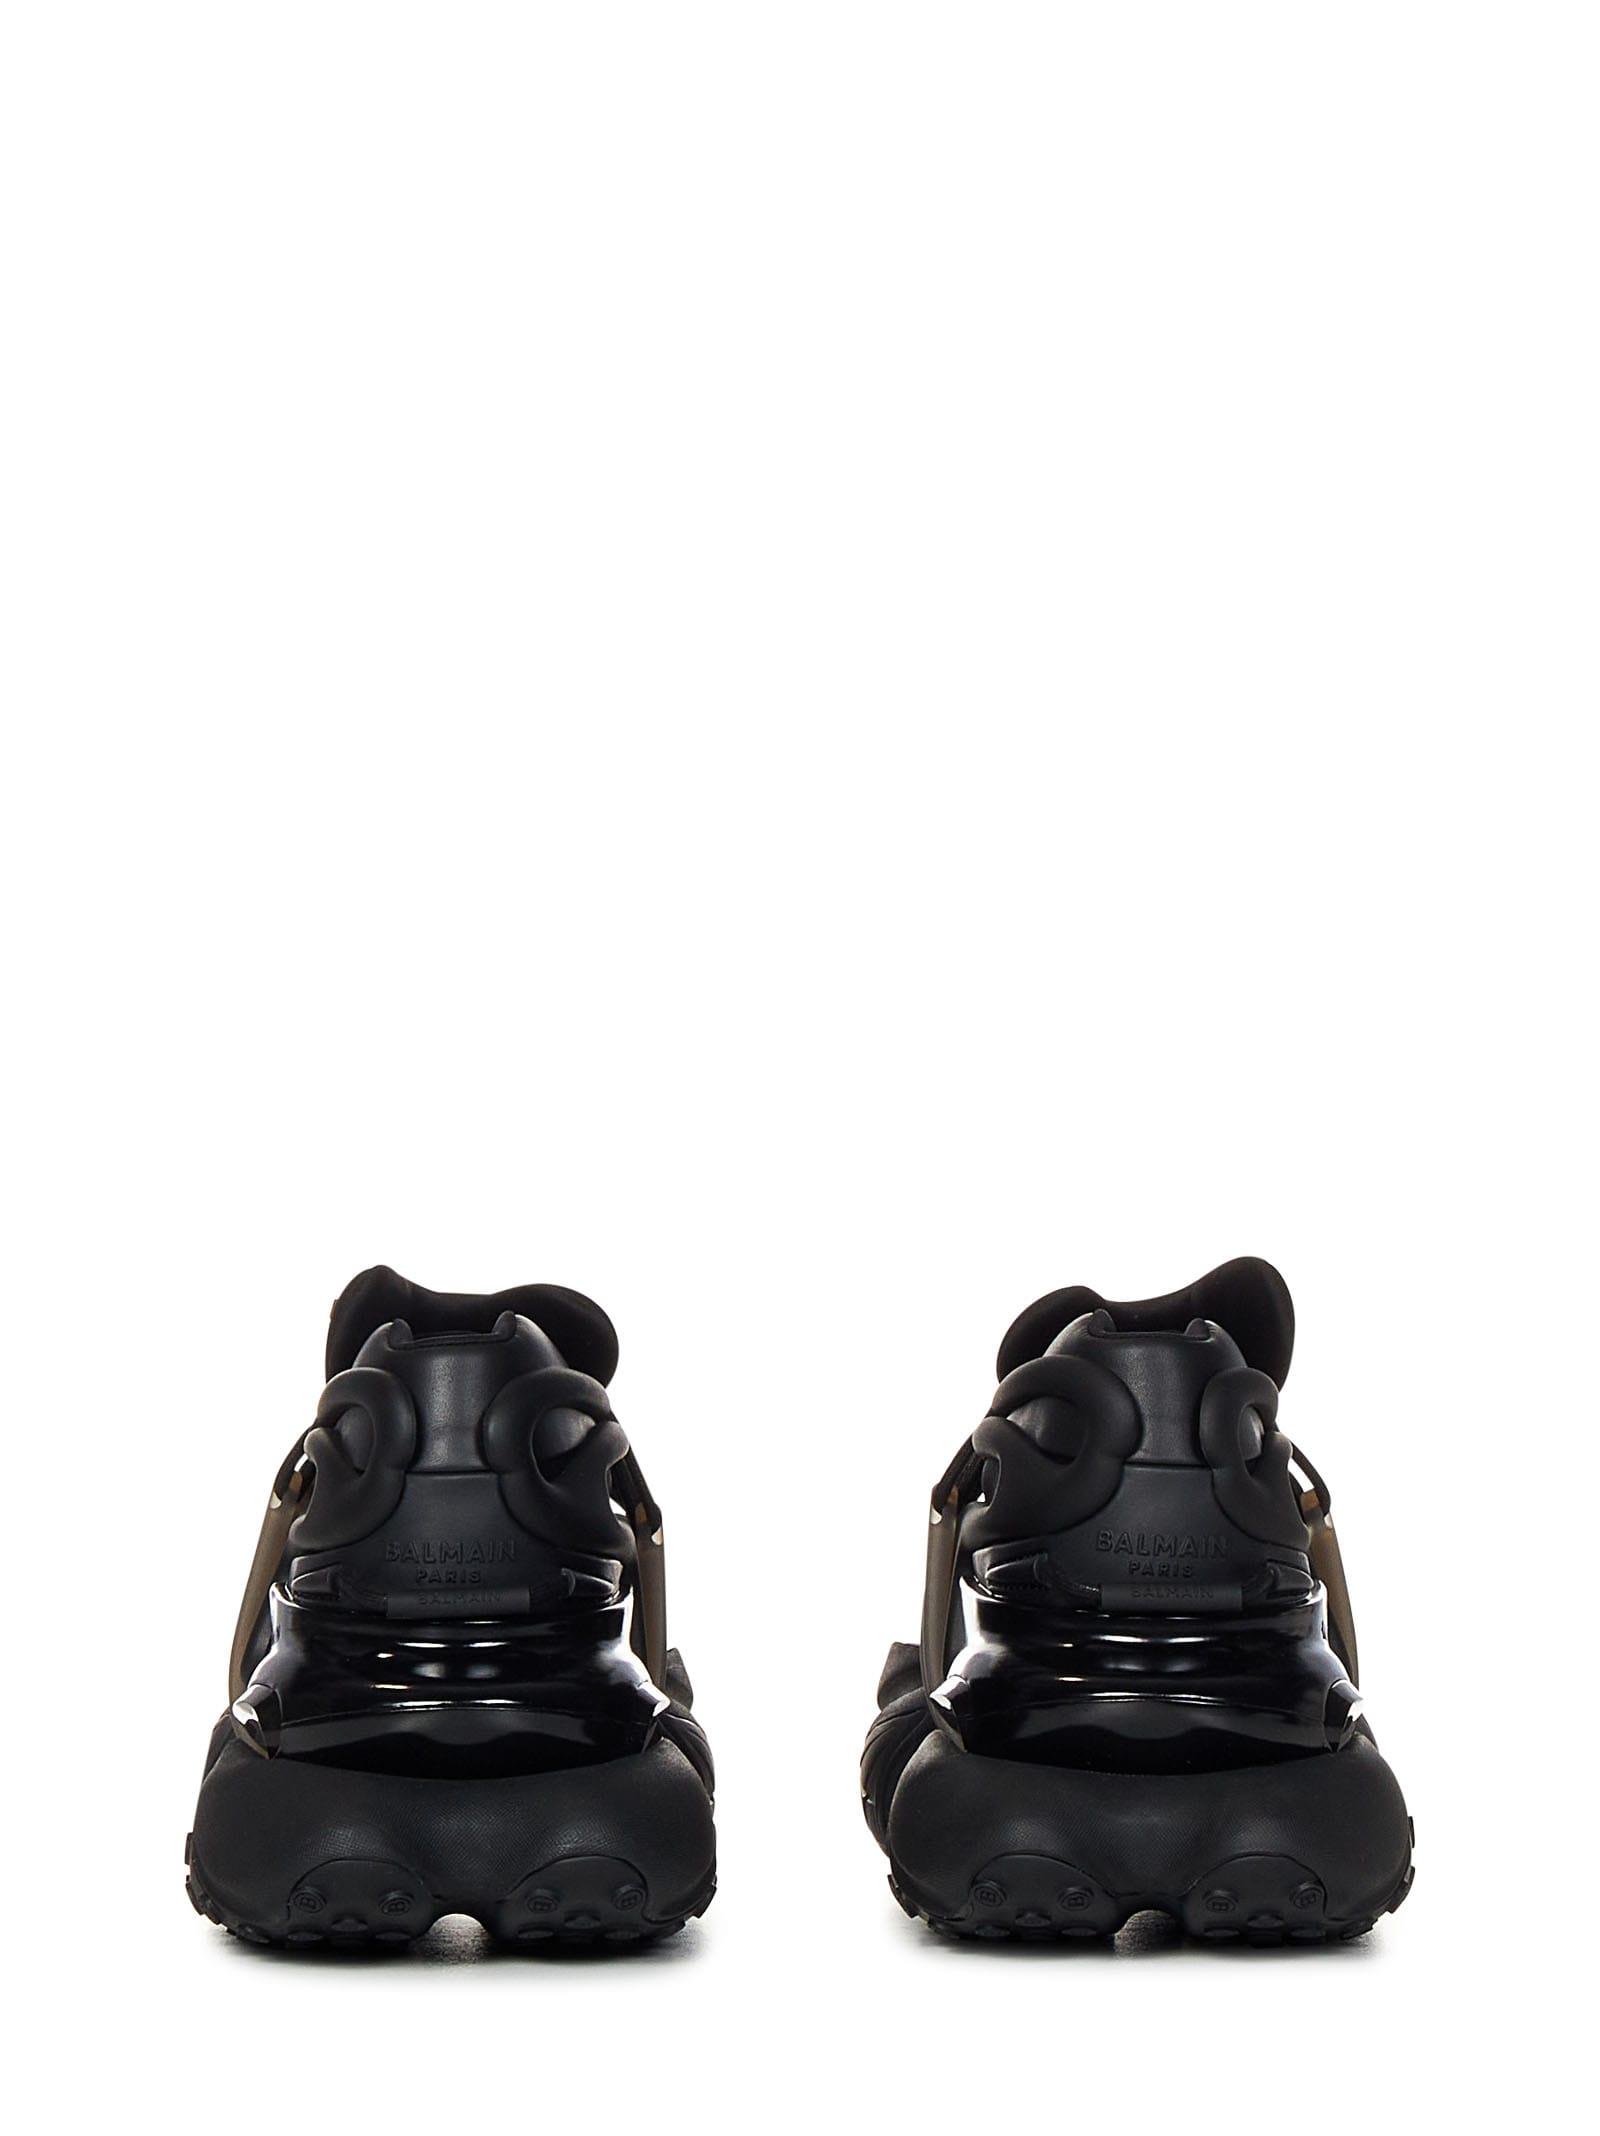 Balmain Unicorn Neoprene And Calfskin Sneakers In Black | ModeSens